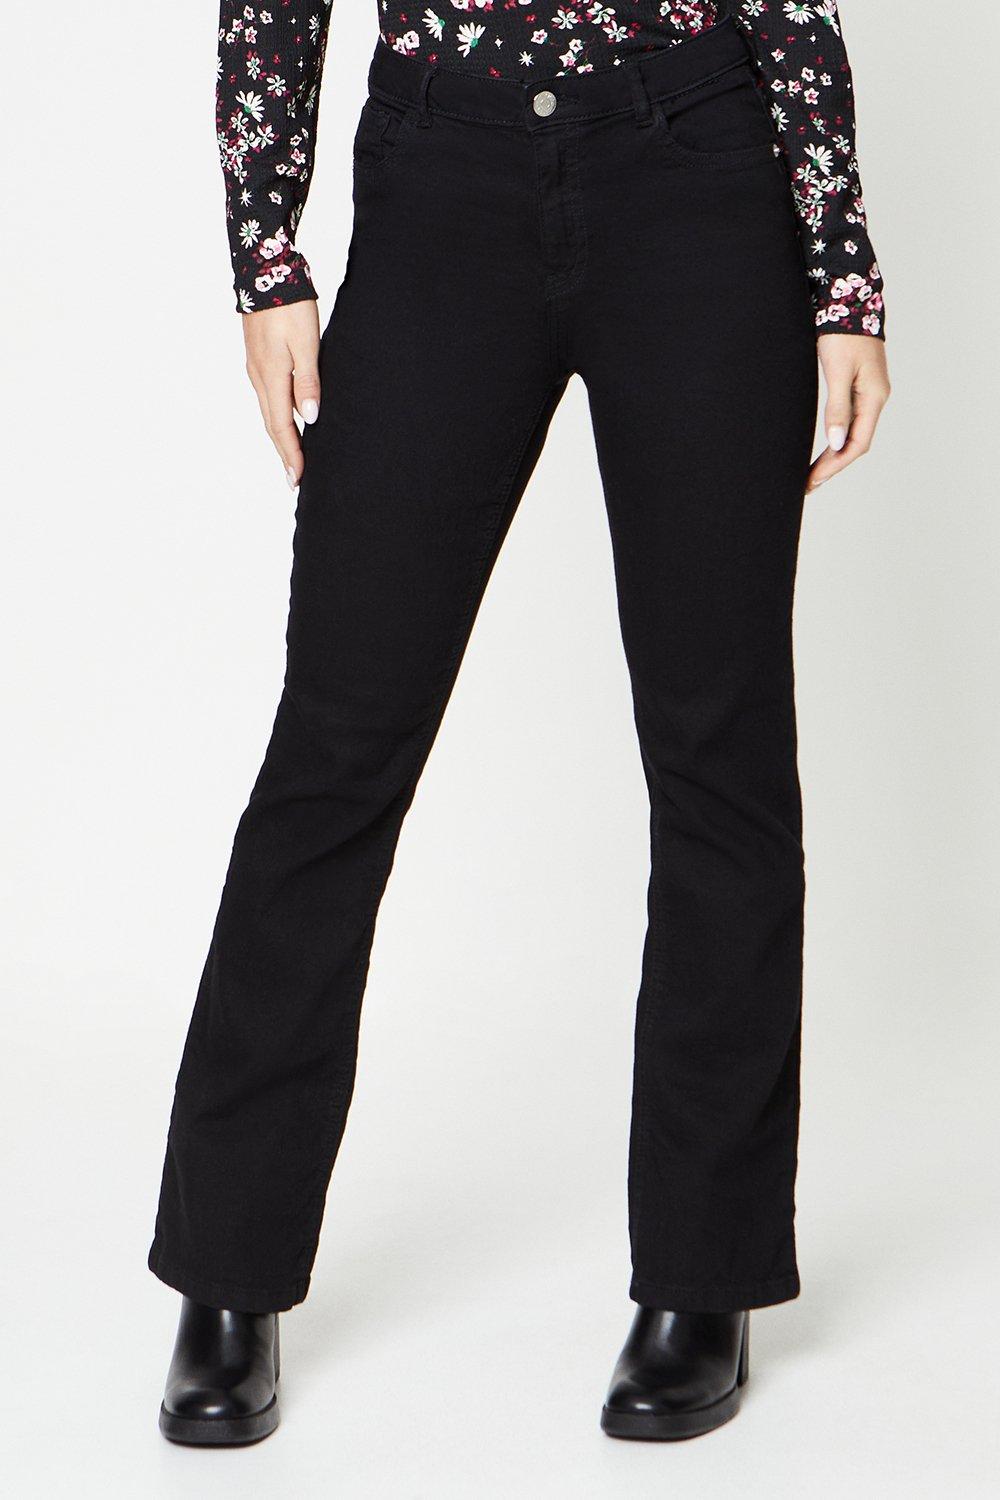 Women’s Petite Comfort Stretch Bootcut Jeans - black - 8